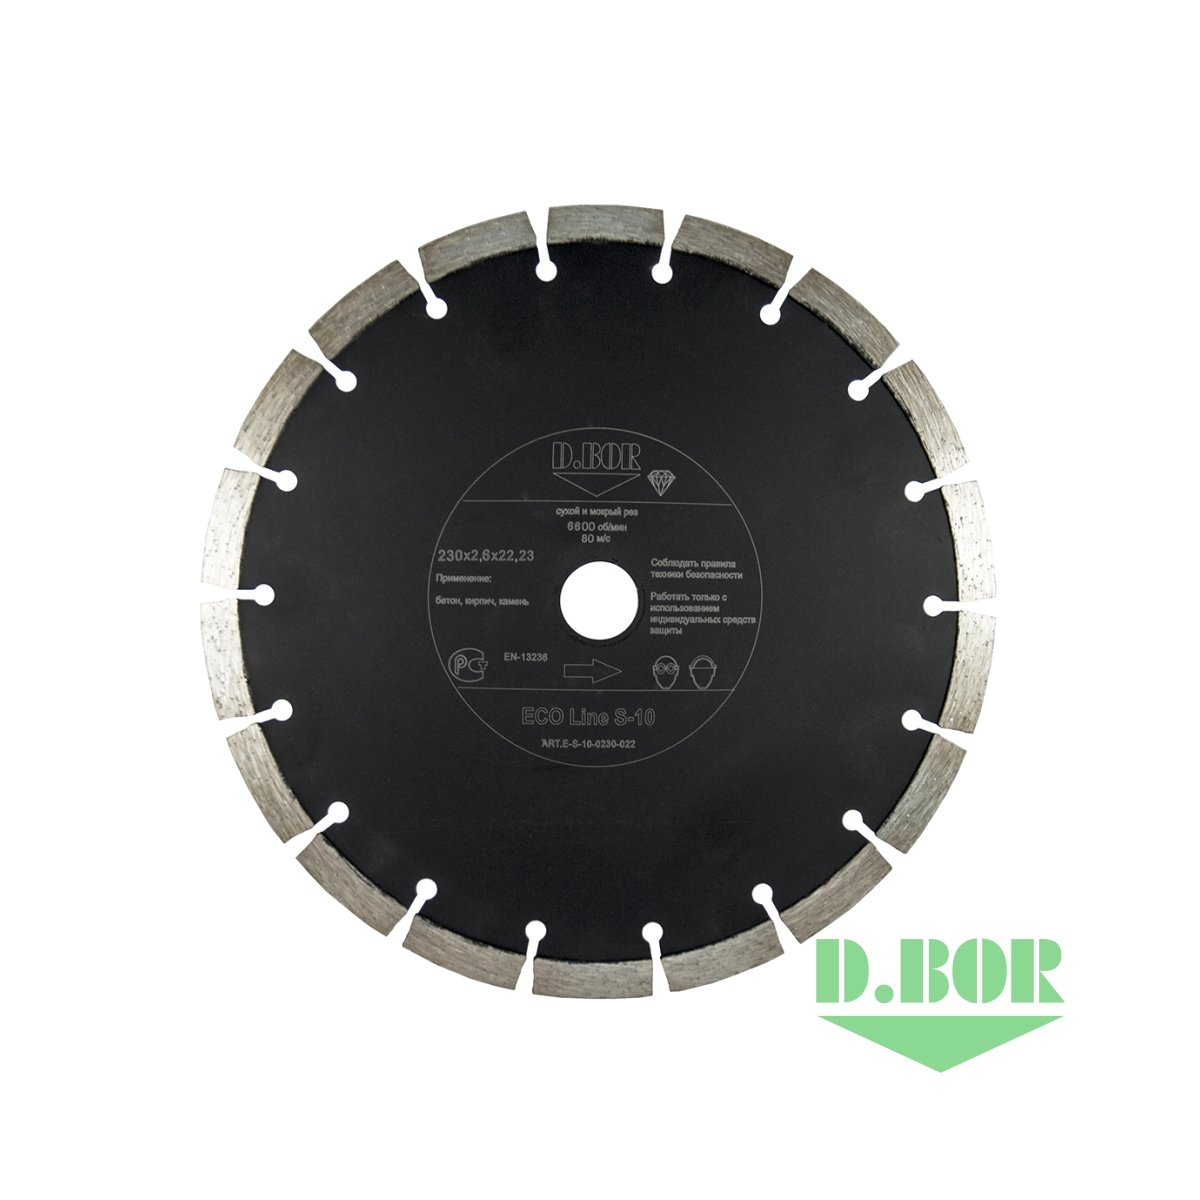 Алмазный диск ECO Line S-10, 300x3,0x25,40 (арт. E-S-10-0300-025) "D.BOR"